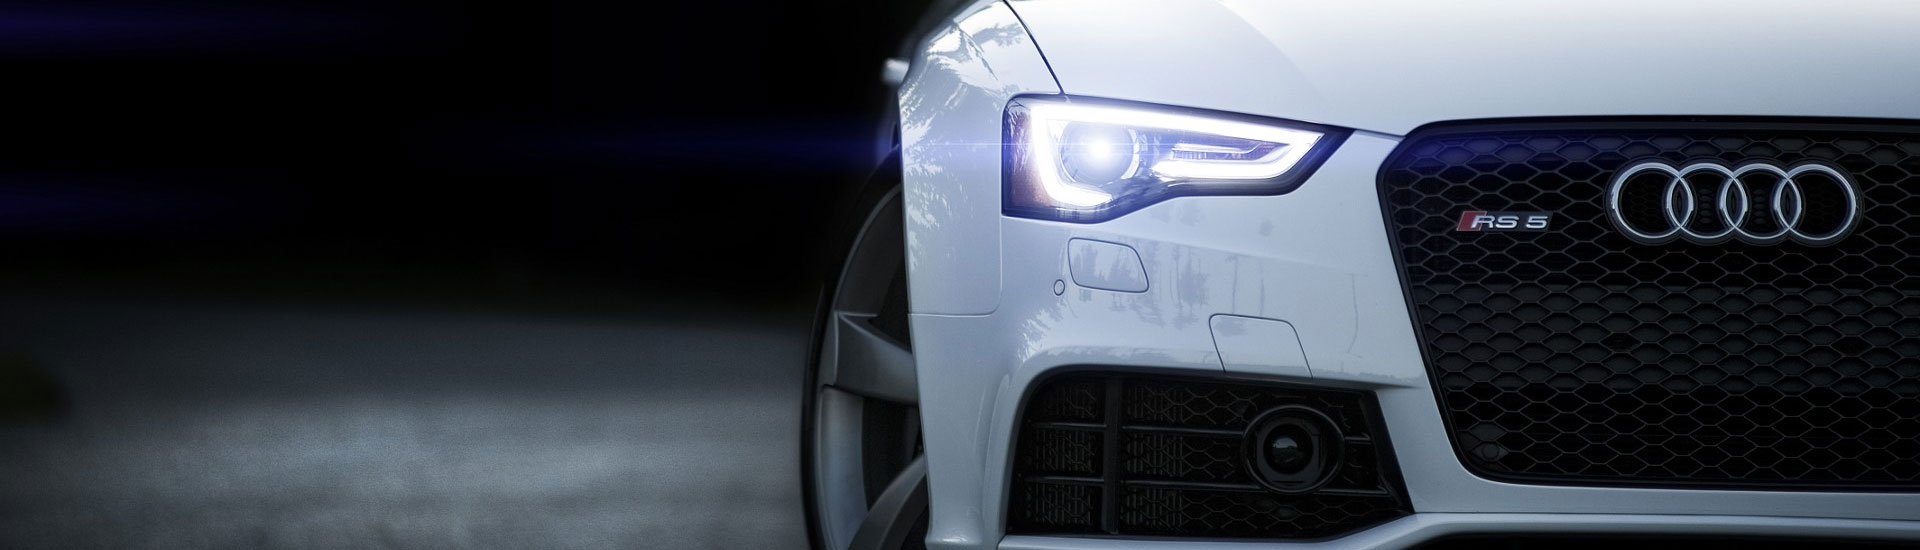 Audi Fog Light Tint Covers